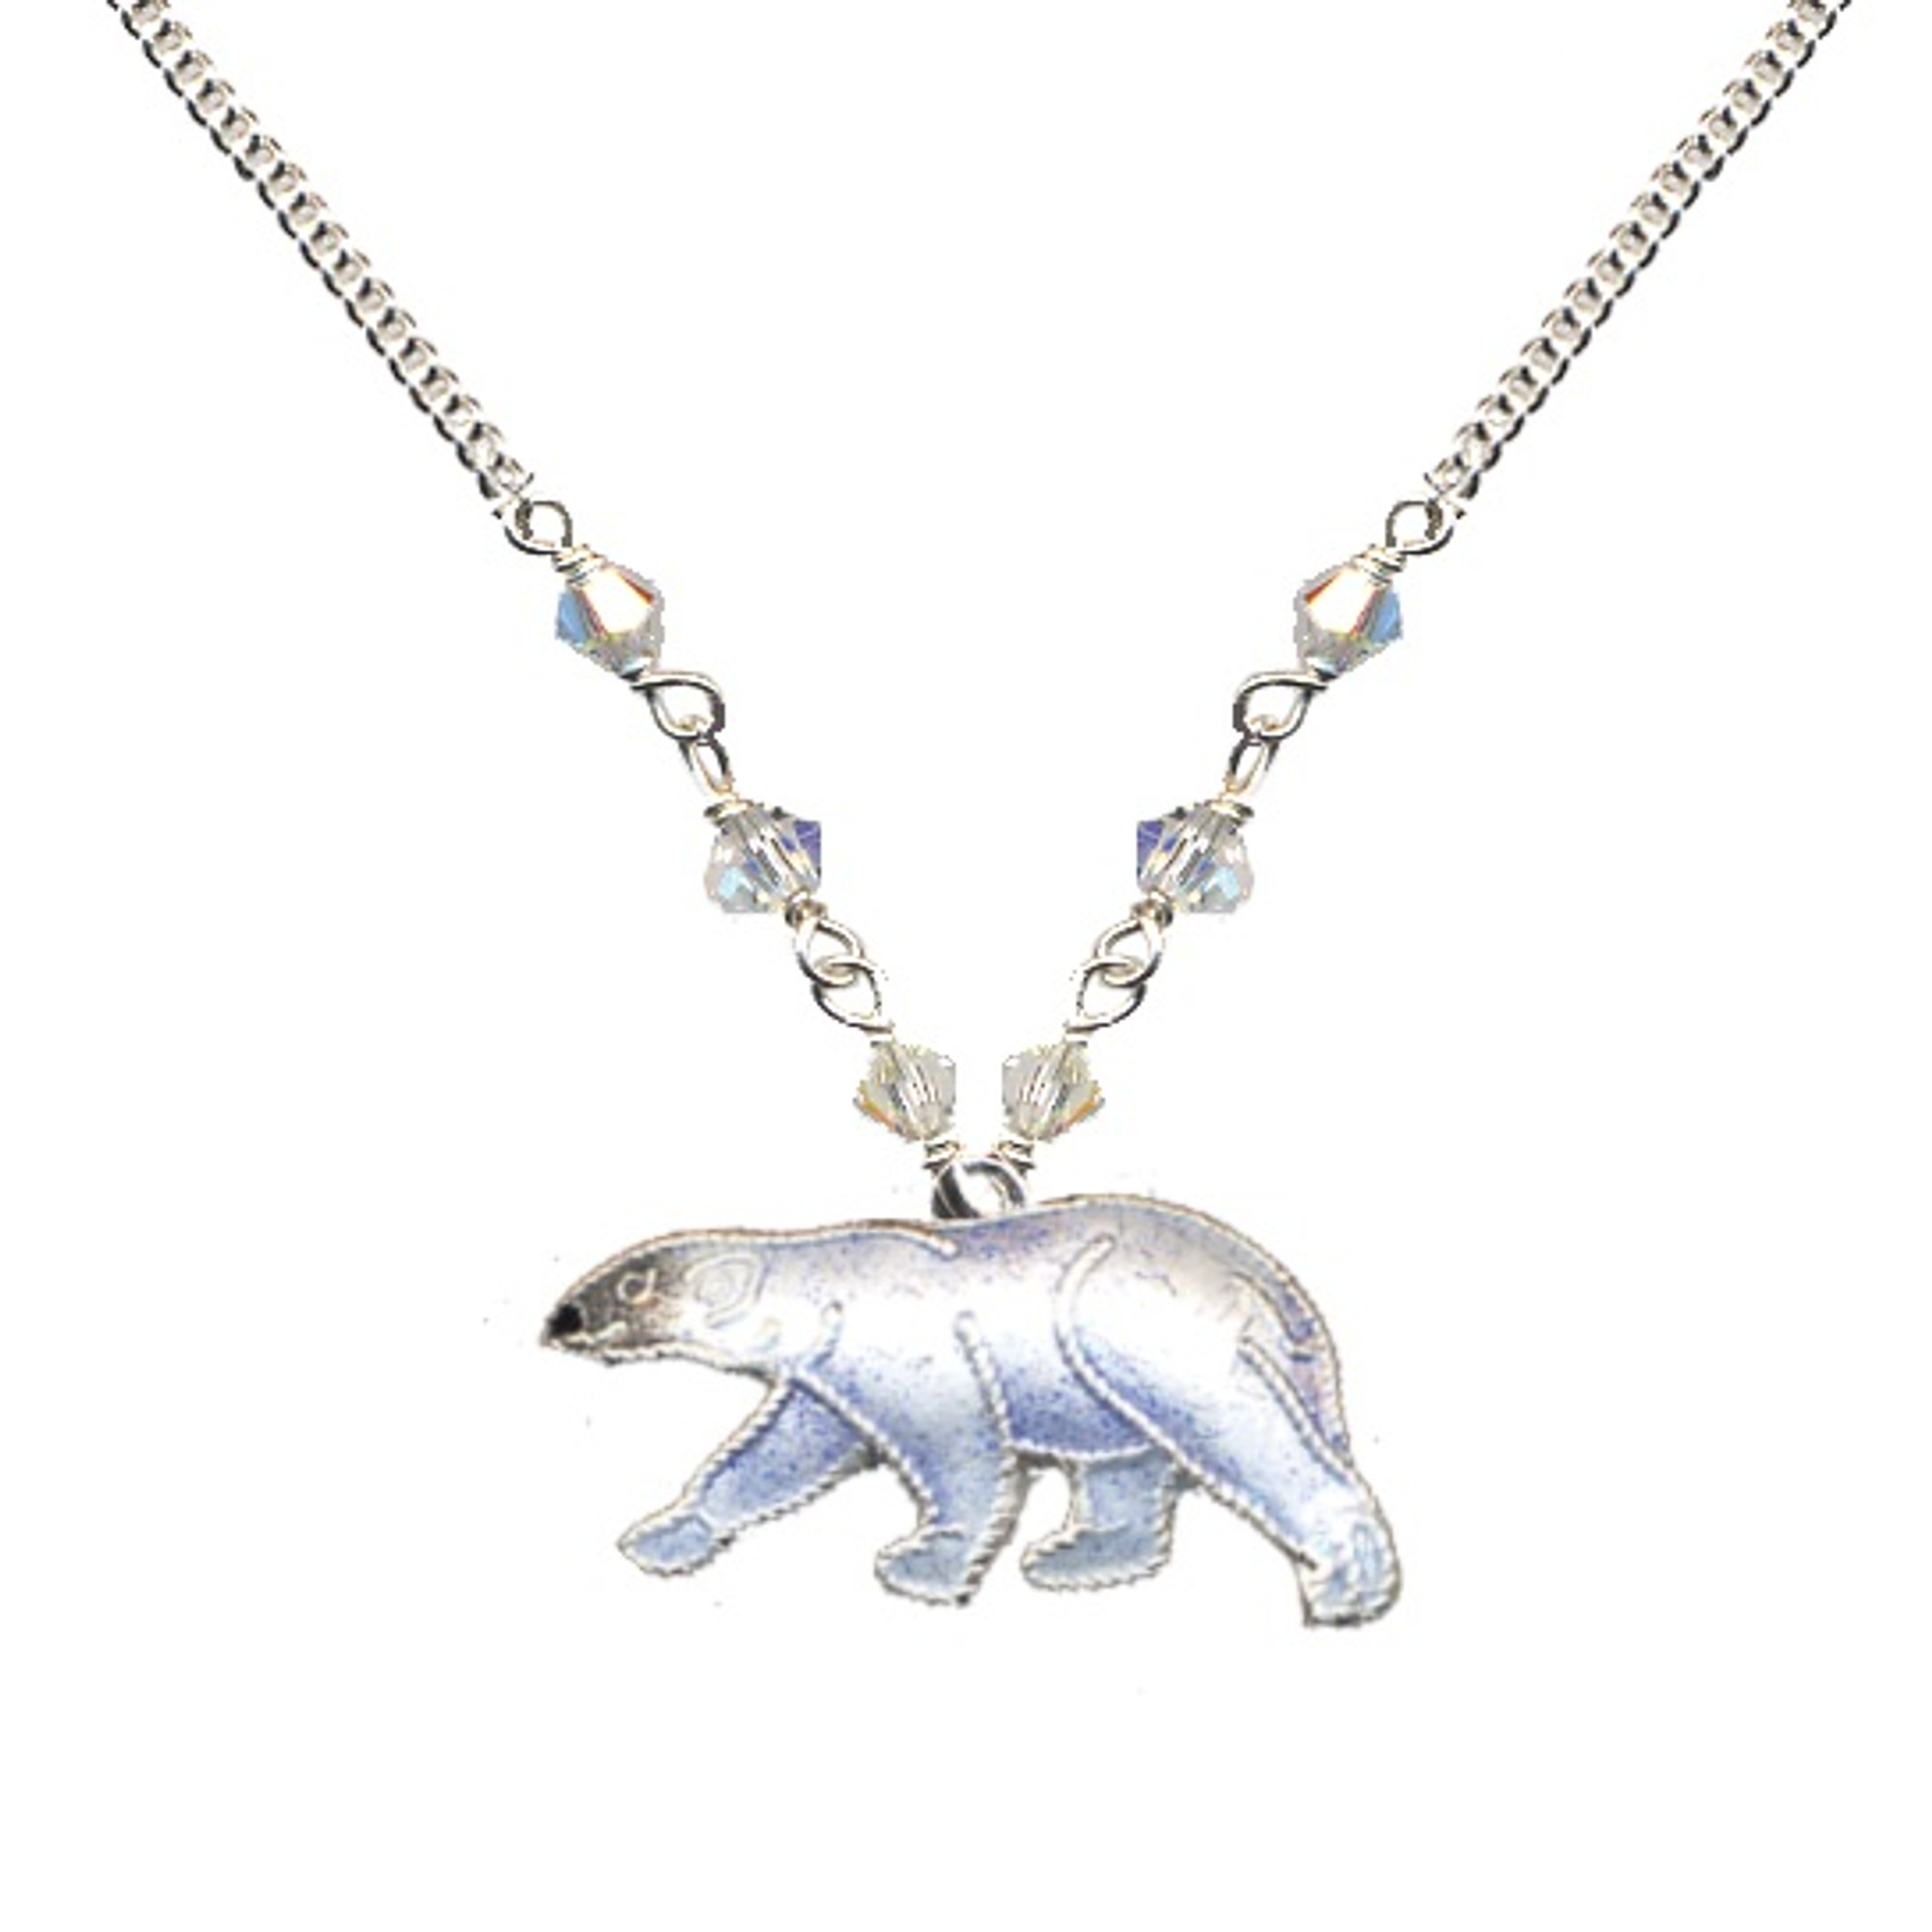 W2C LV Made/Human Made Polar Bear Necklace? : r/JewelryReps